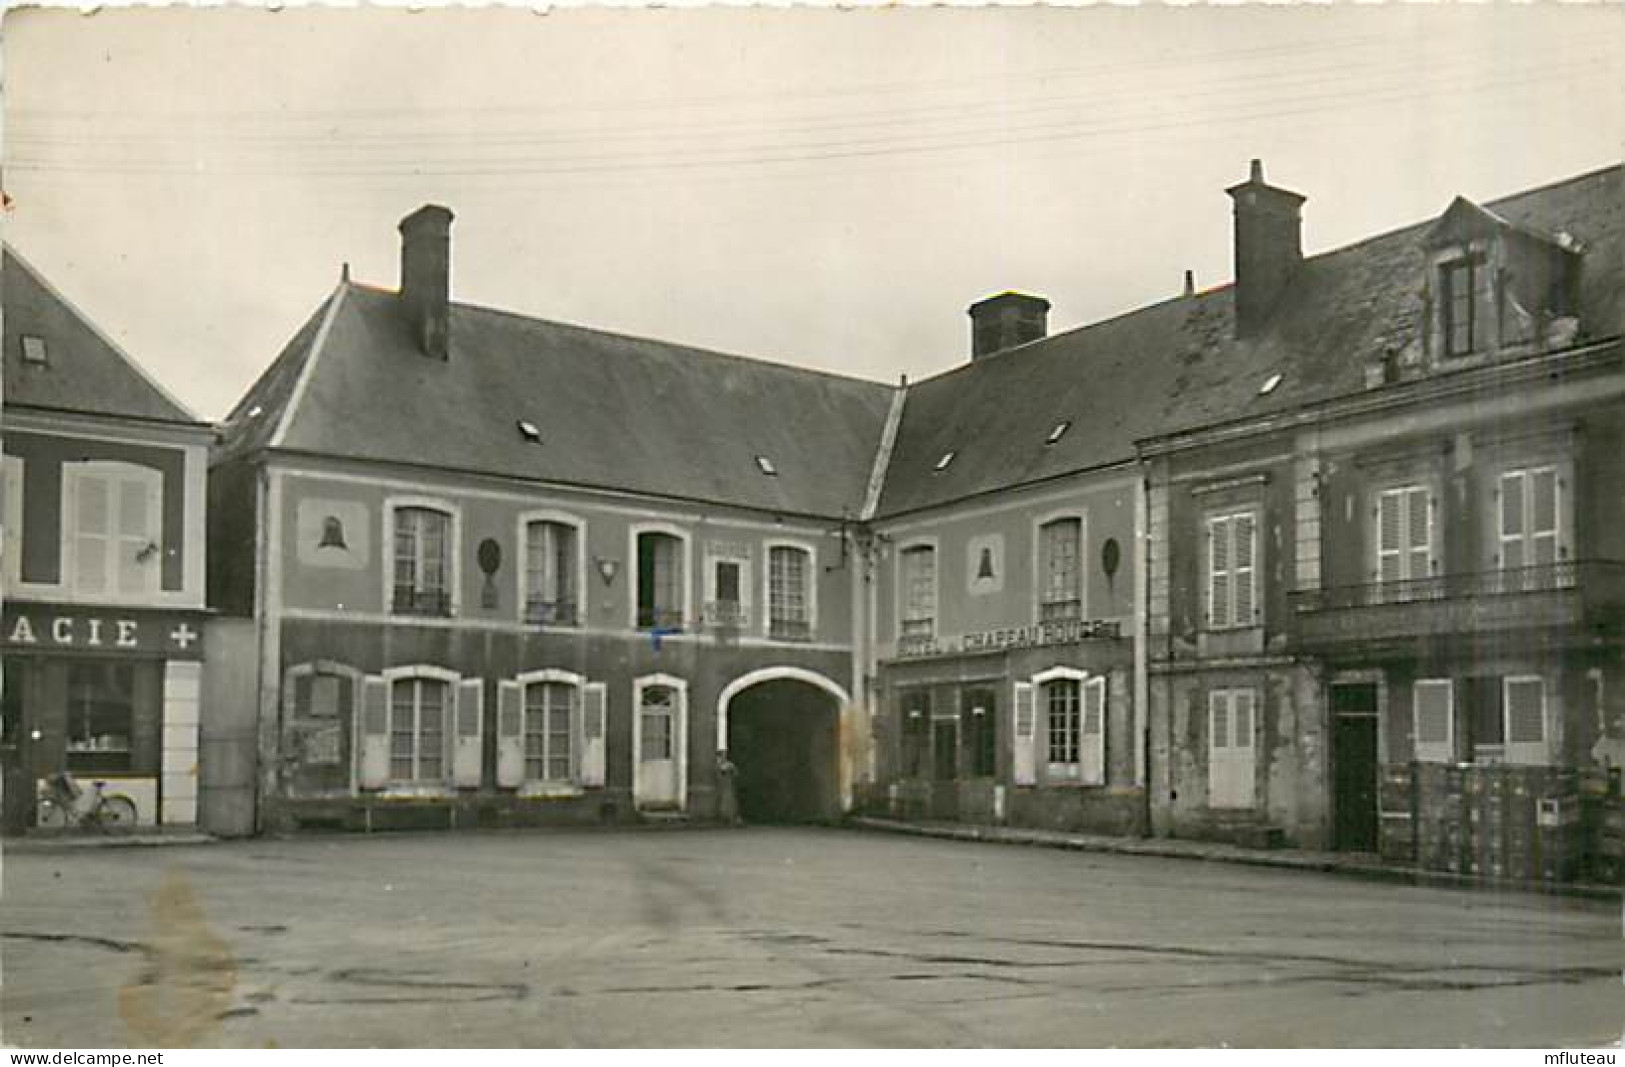 72* VIBRAYE  Place Hotel De Ville  (CPSM Petit Format)                 MA95,1229 - Vibraye